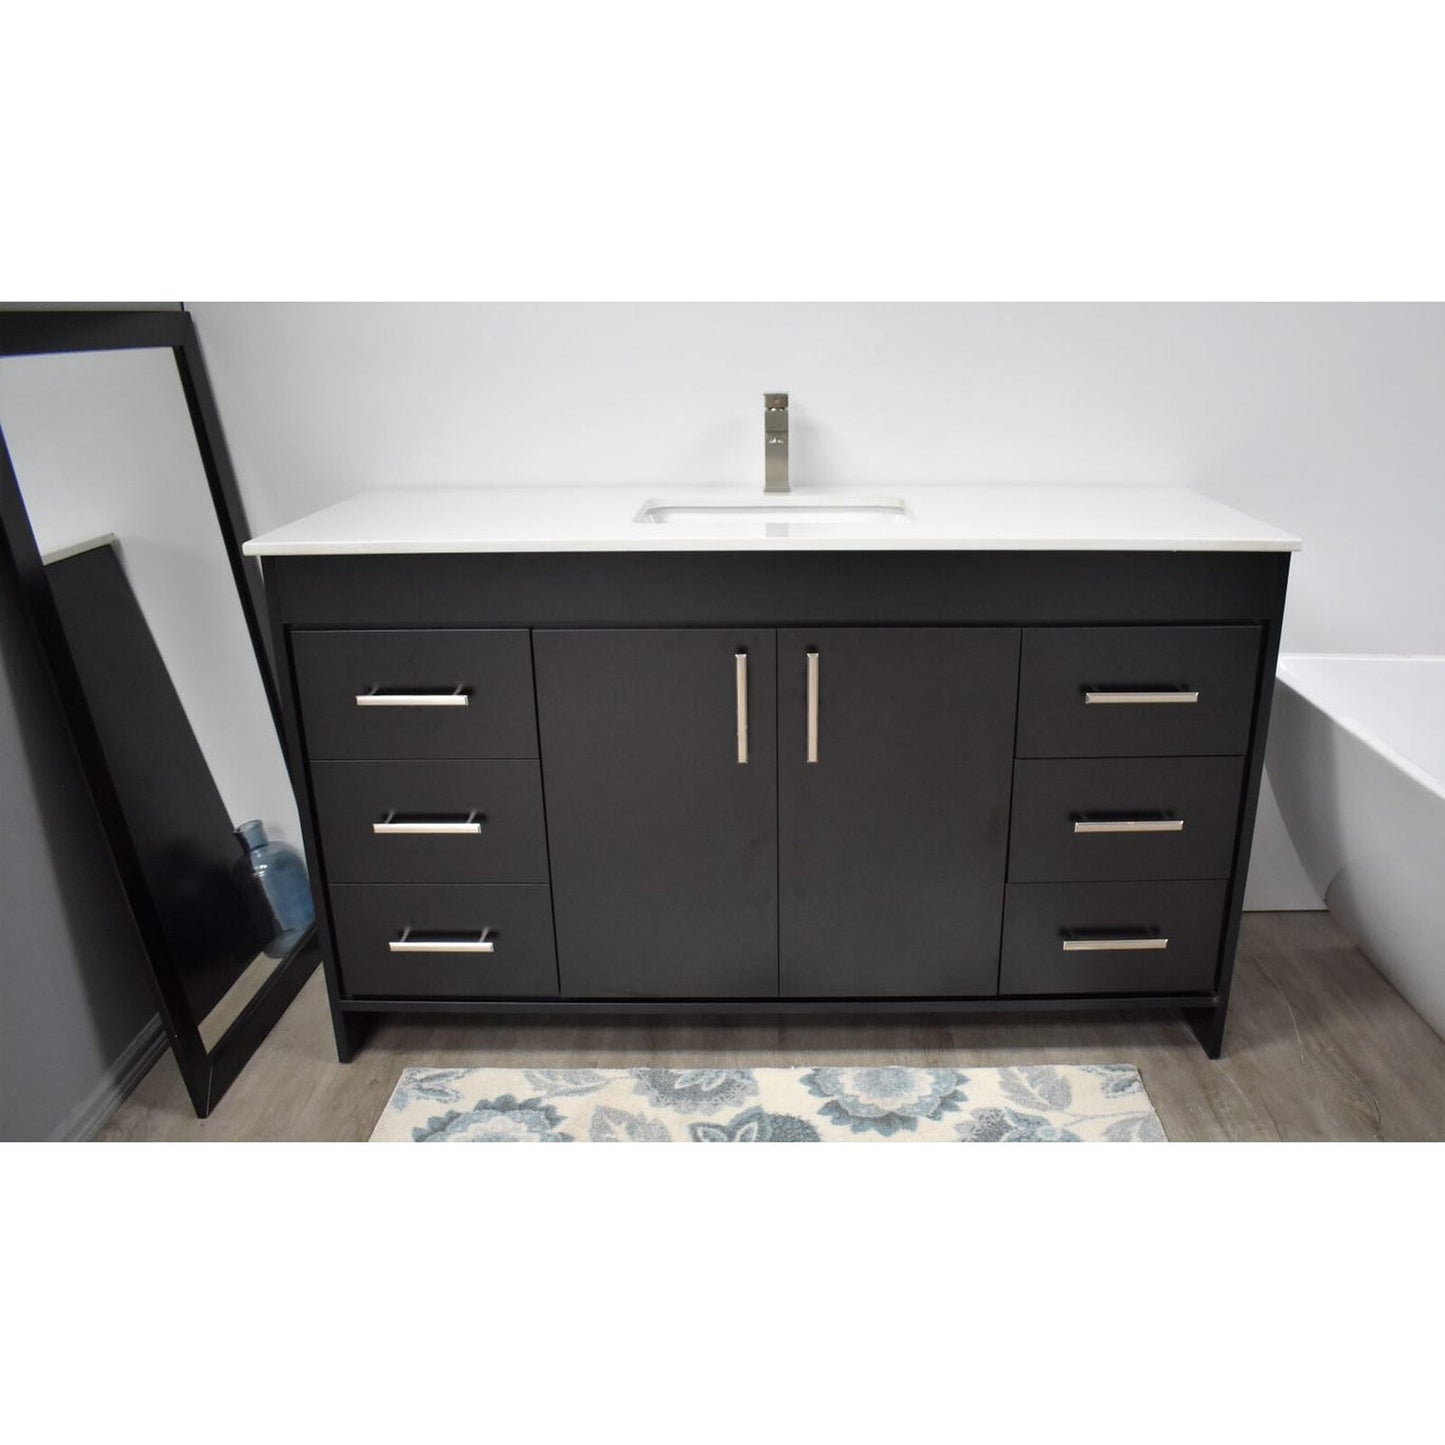 Volpa USA Capri 60" x 22" Black Freestanding Modern Bathroom Vanity With Undermount Single Sink And White Microstone Top With Brushed Nickel Edge Handles